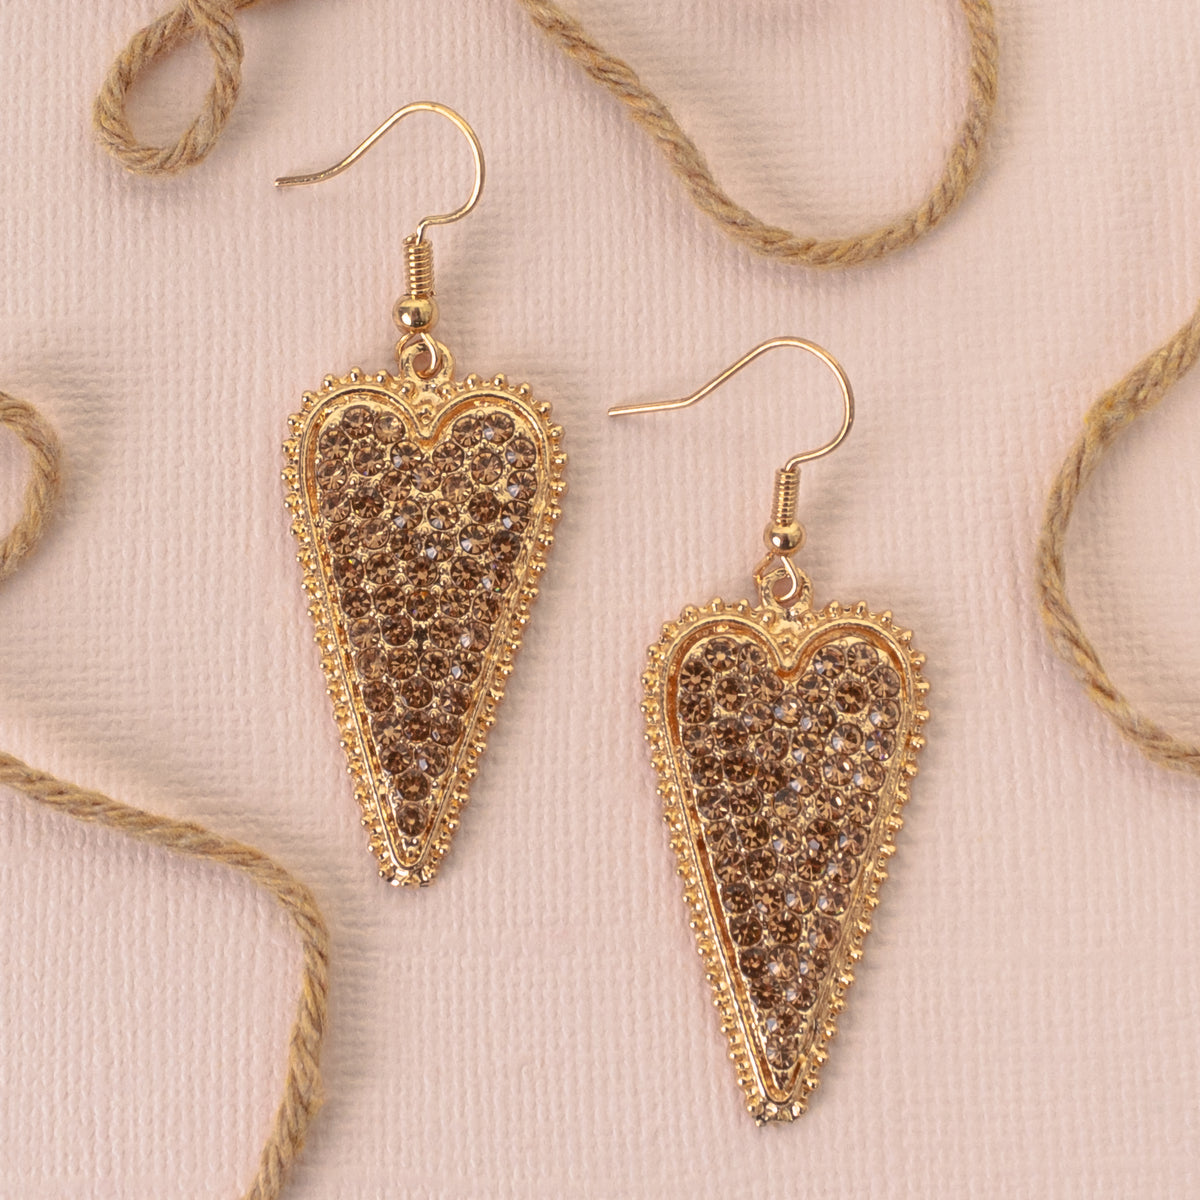 73425 - Beaded Heart Earrings - Gold - Fashion Jewelry Wholesale